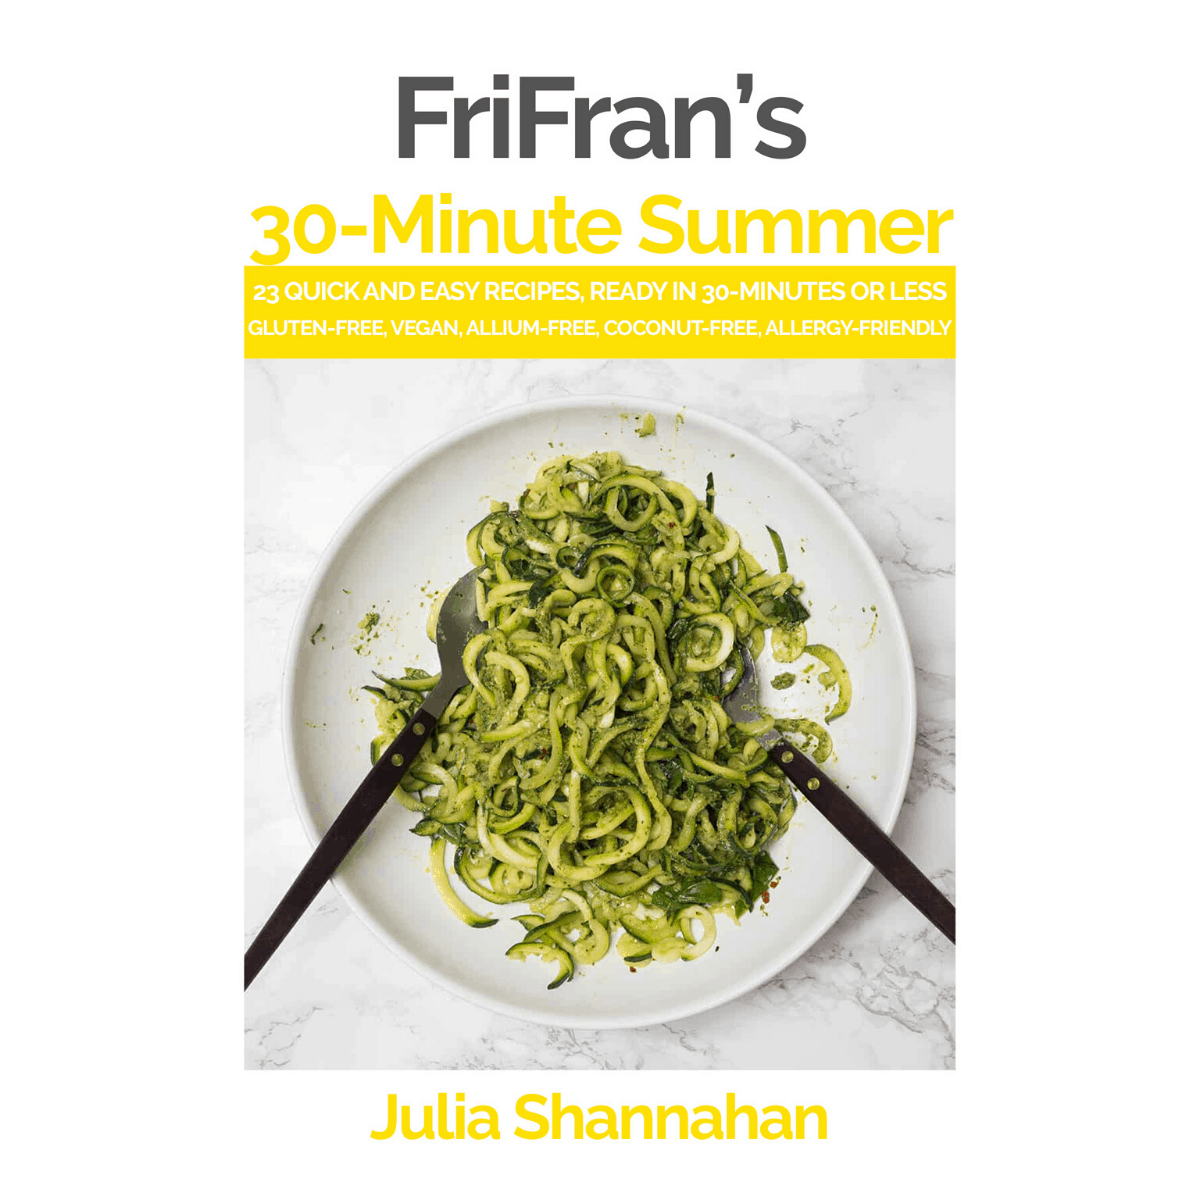 FriFran's 30-Minute Summer Cookbook #glutenfree #vegan #seasonal